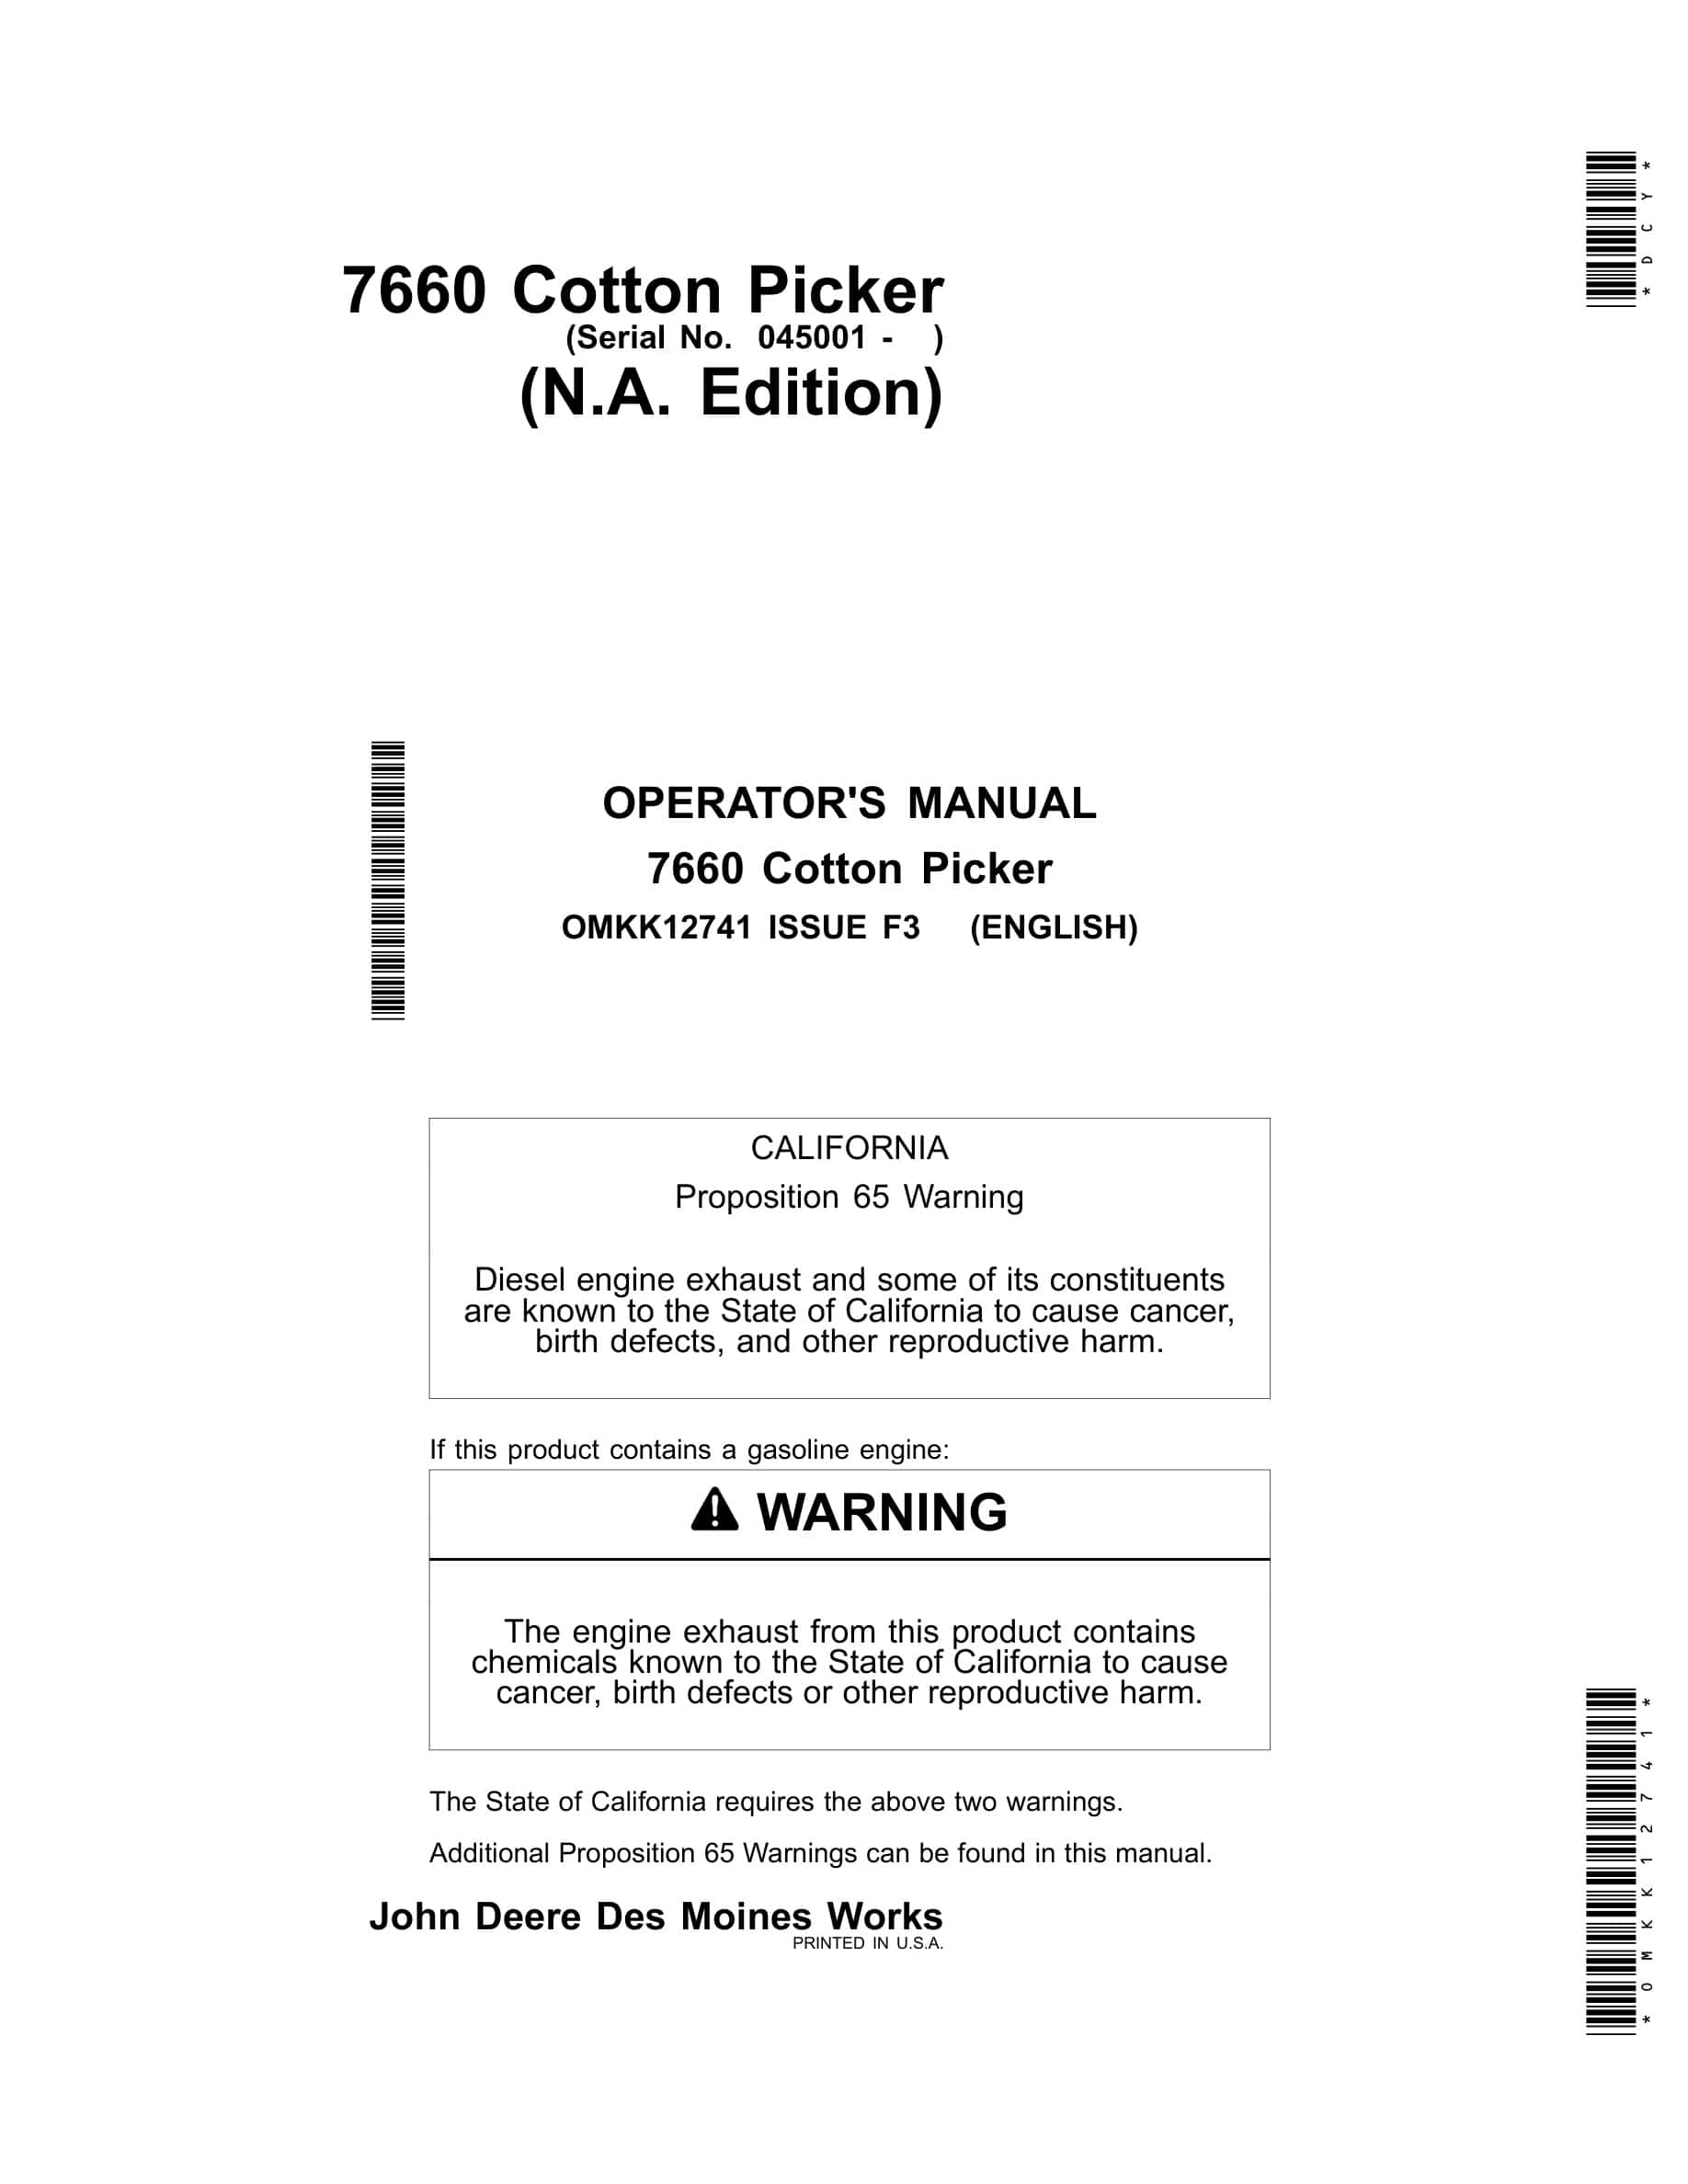 John Deere 7660 Cotton Picker Operator Manual OMKK12741-1